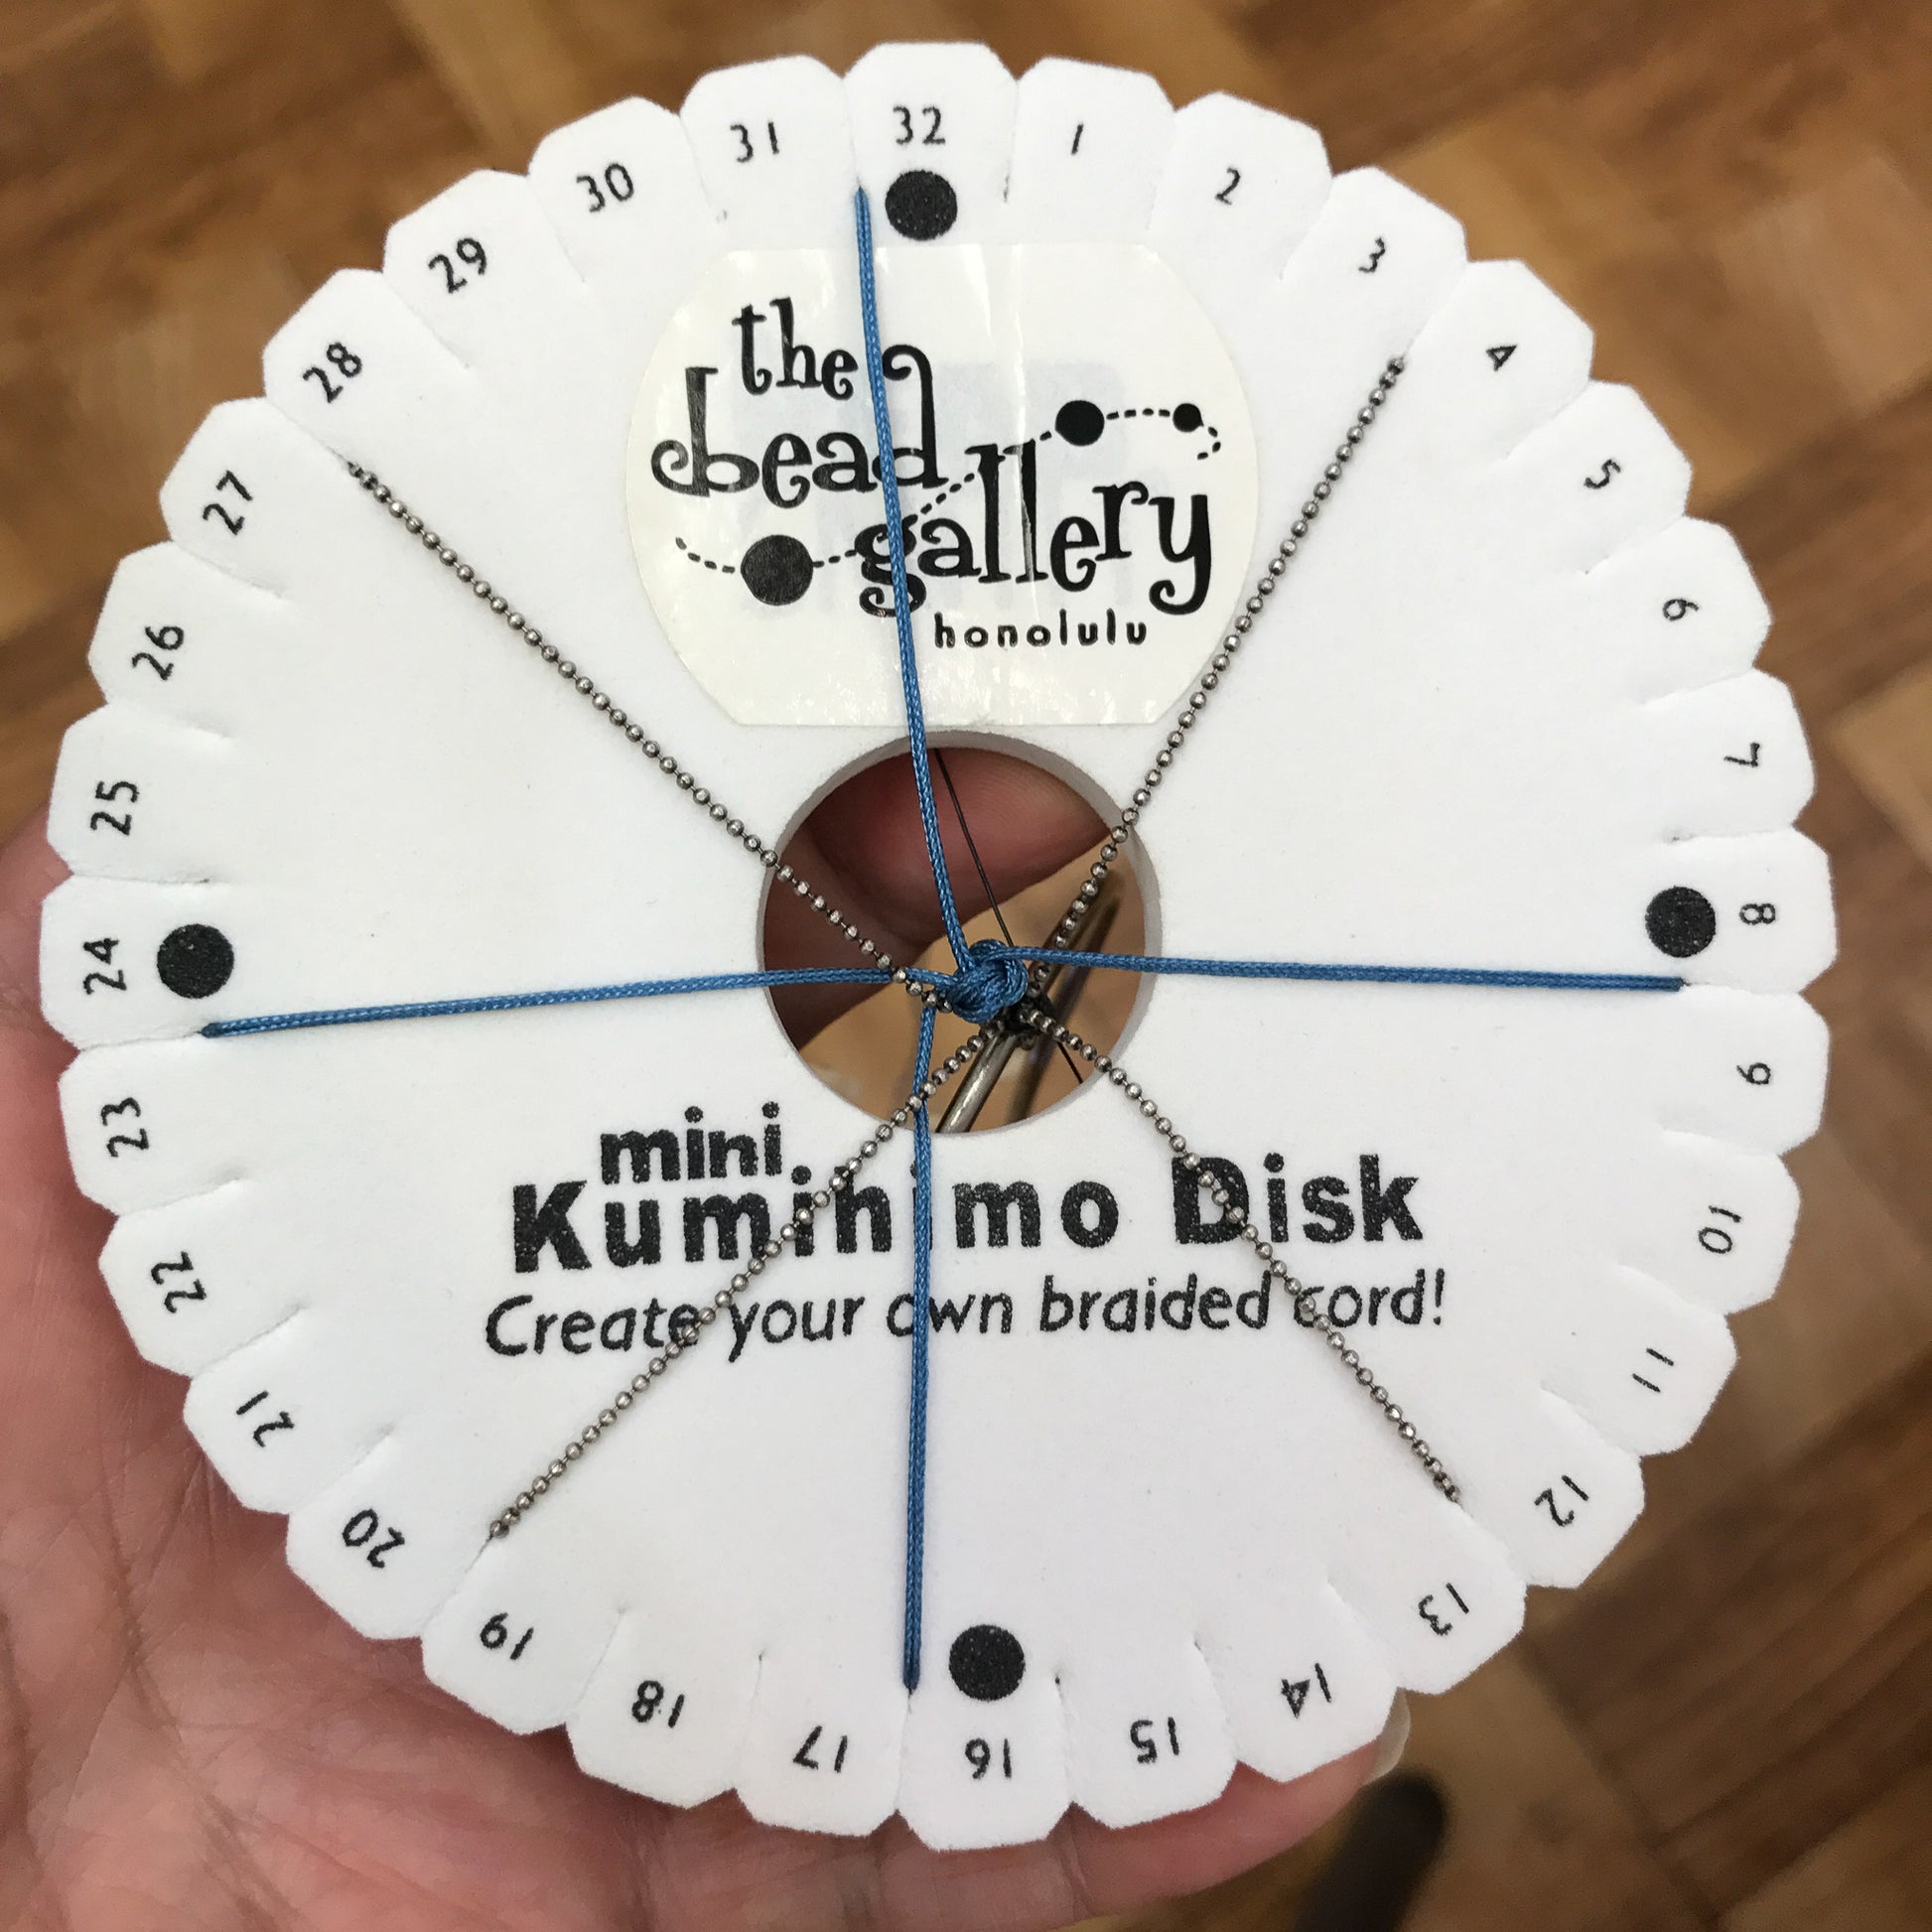 Mini Kumihimo Disk - 1 pc.